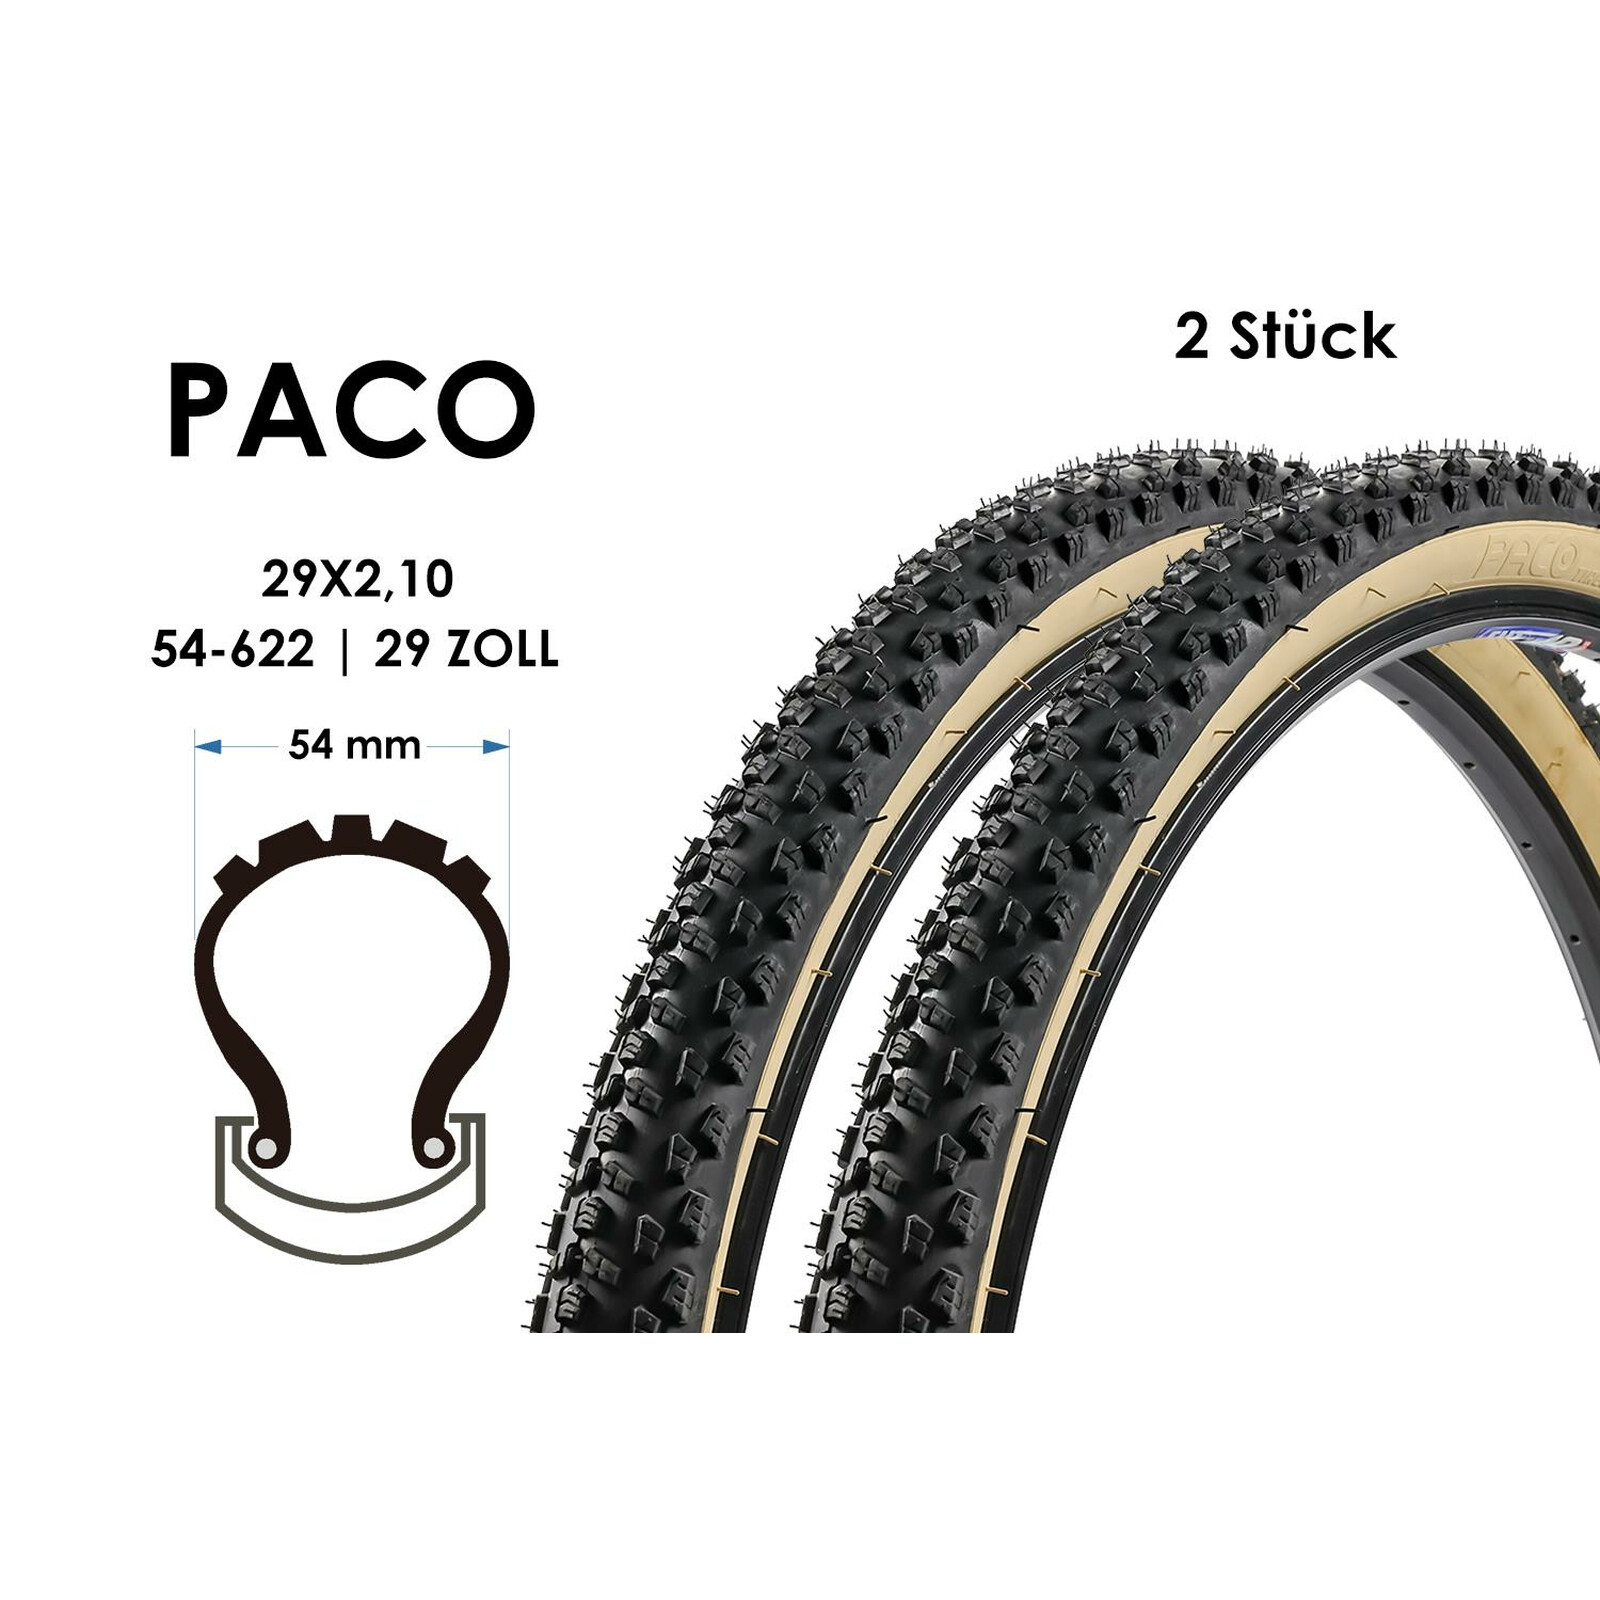 2 Stück PACO 29 € MTB 24,99 29x2.10 54, Fahrrad Mantel Reifen Tires Zoll Decke